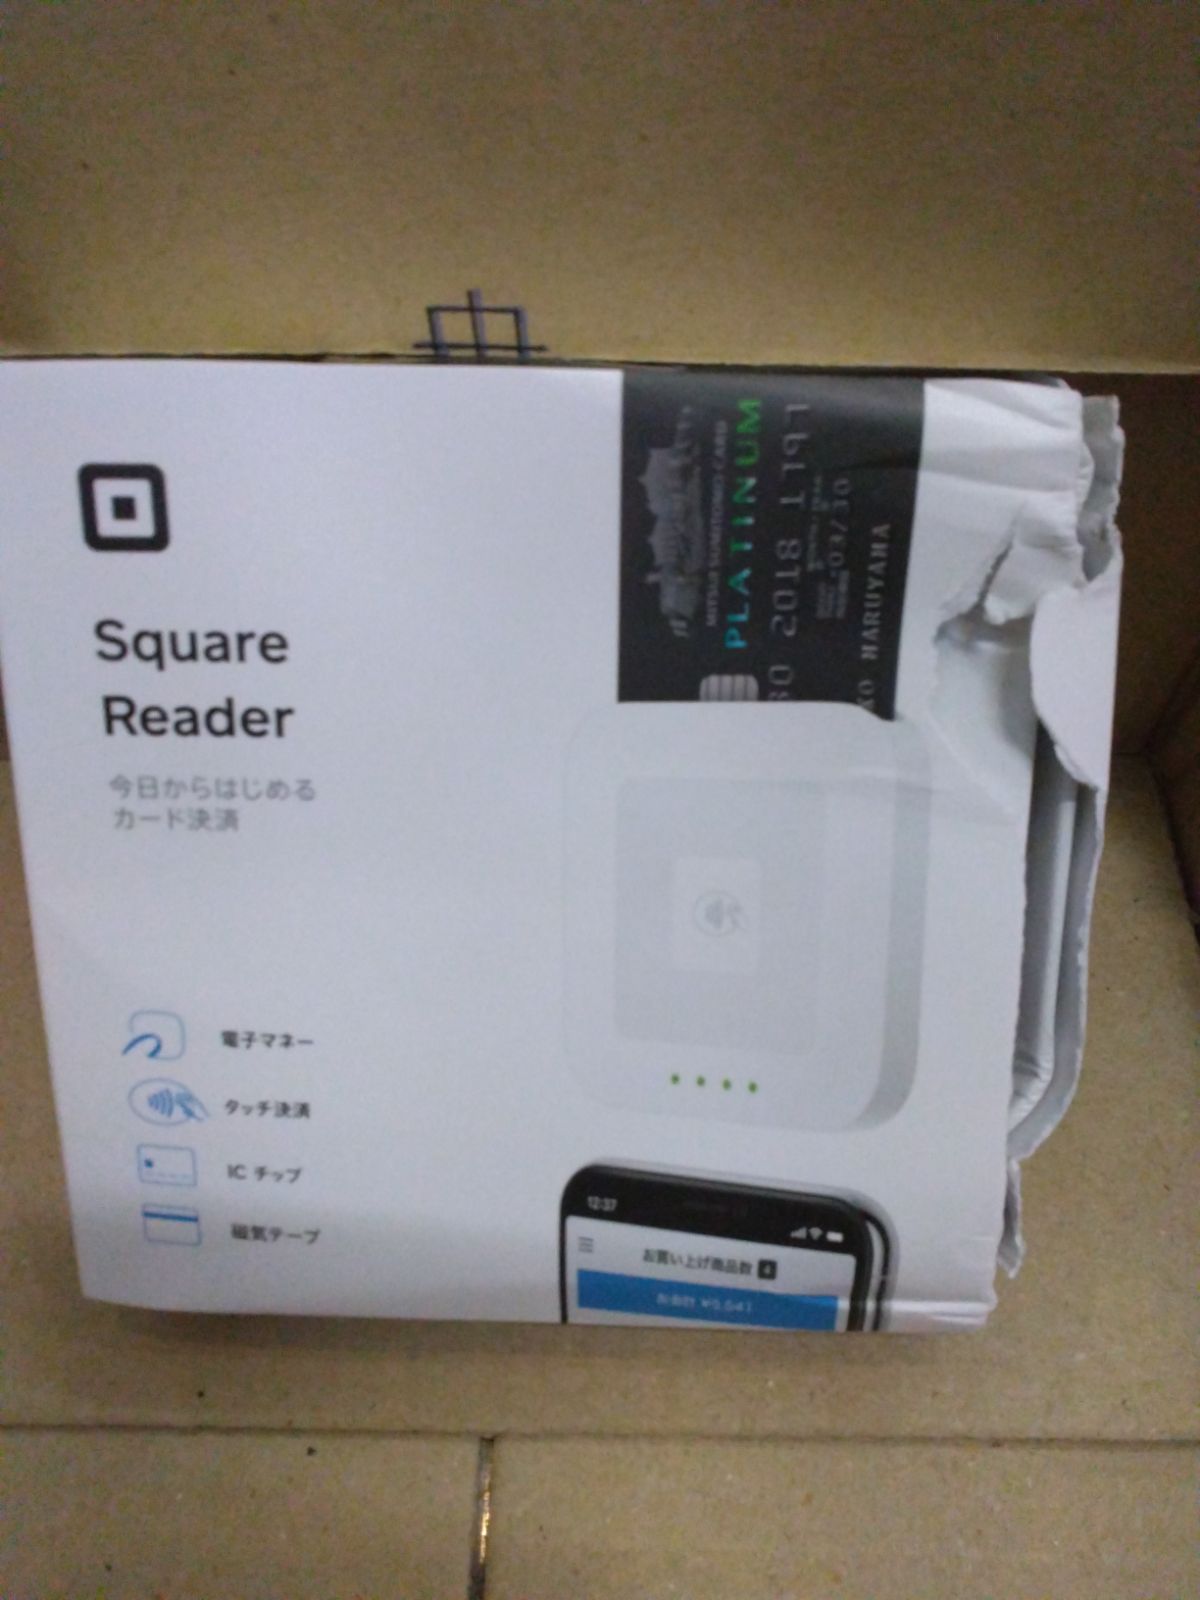 Squareカードリーダー&専用ドック タッチ決済対応 - 店舗用品